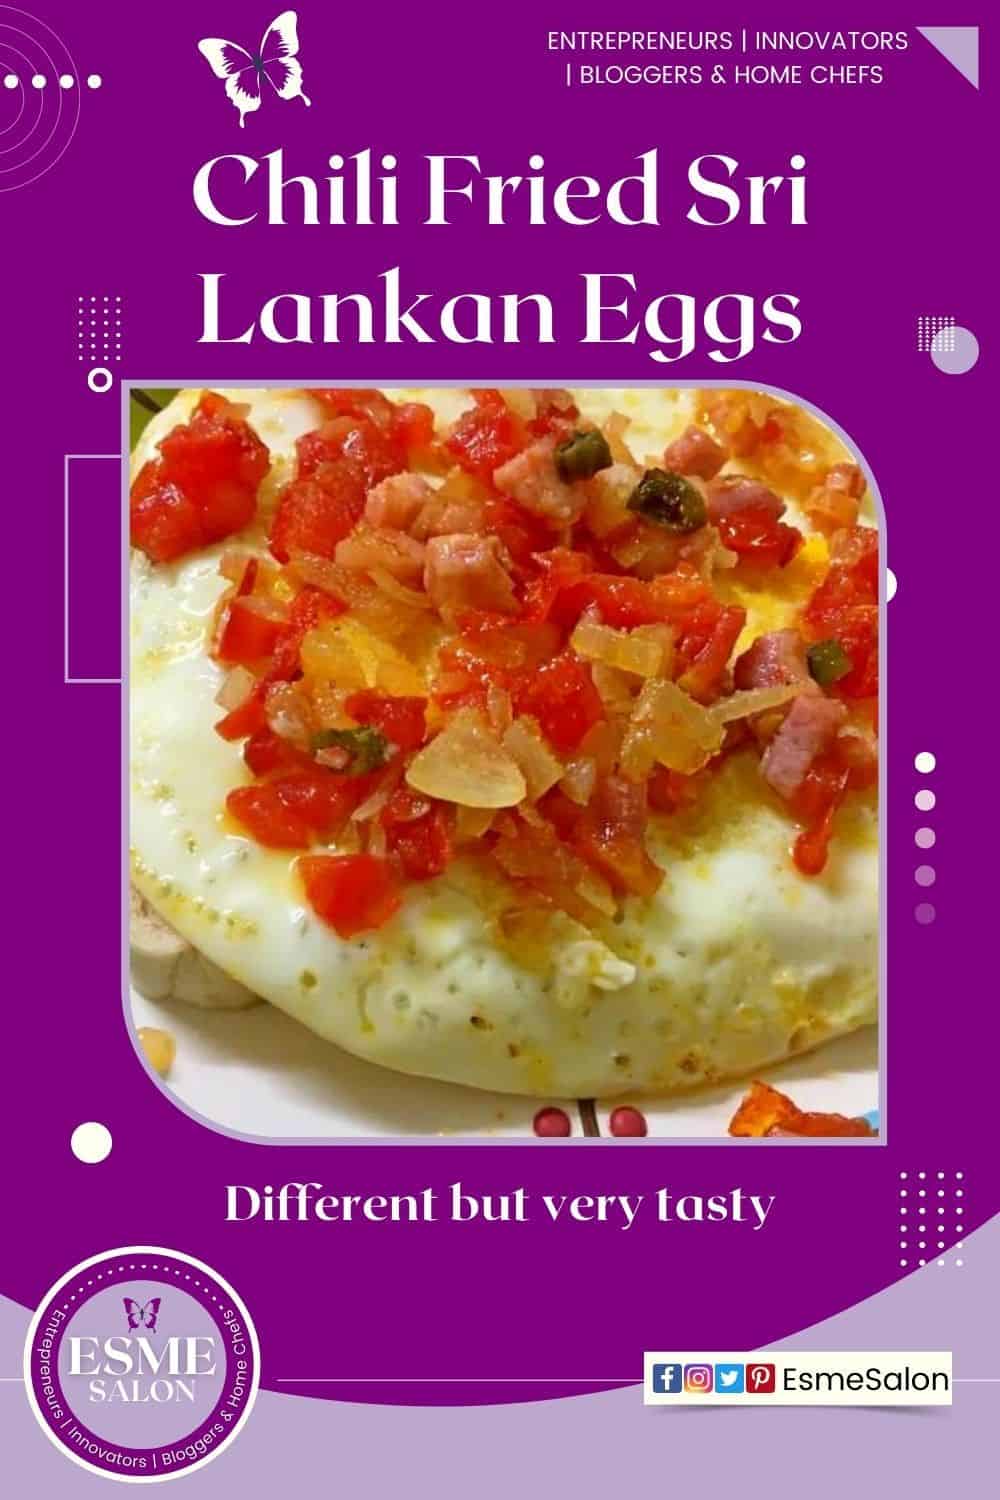 An image of Chili Fried Sri Lankan Eggs